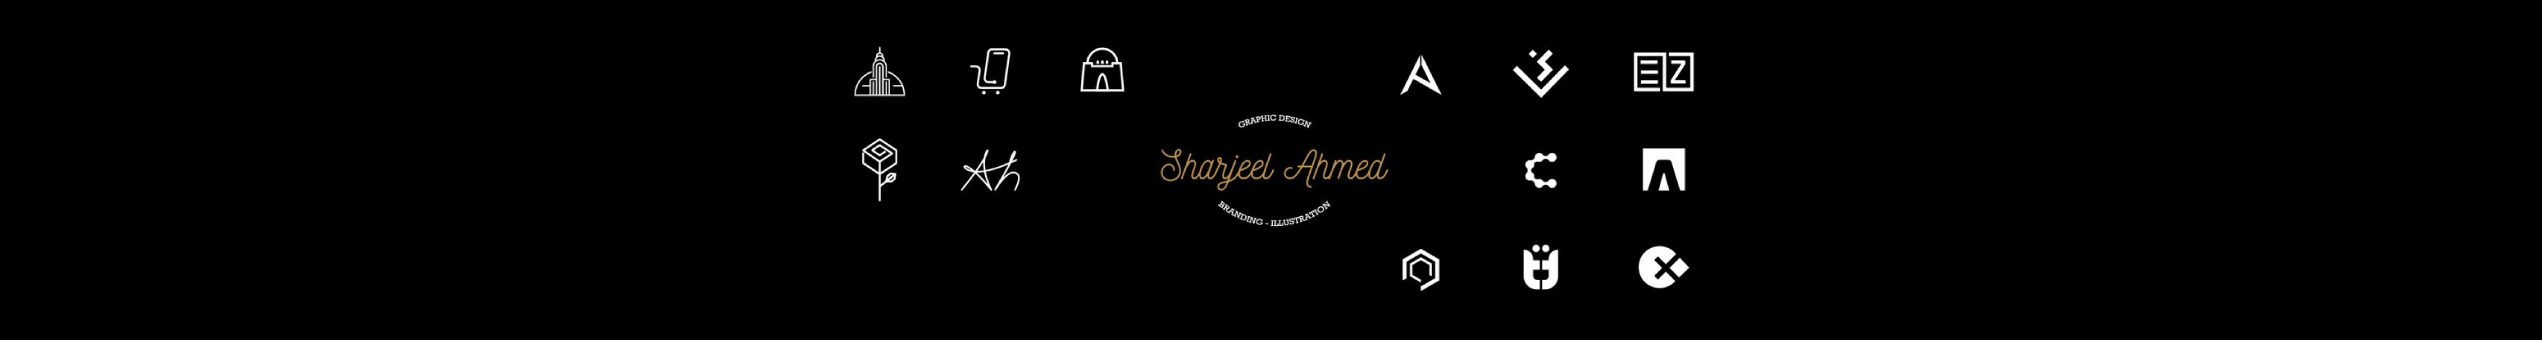 Sharjeel Ahmed's profile banner